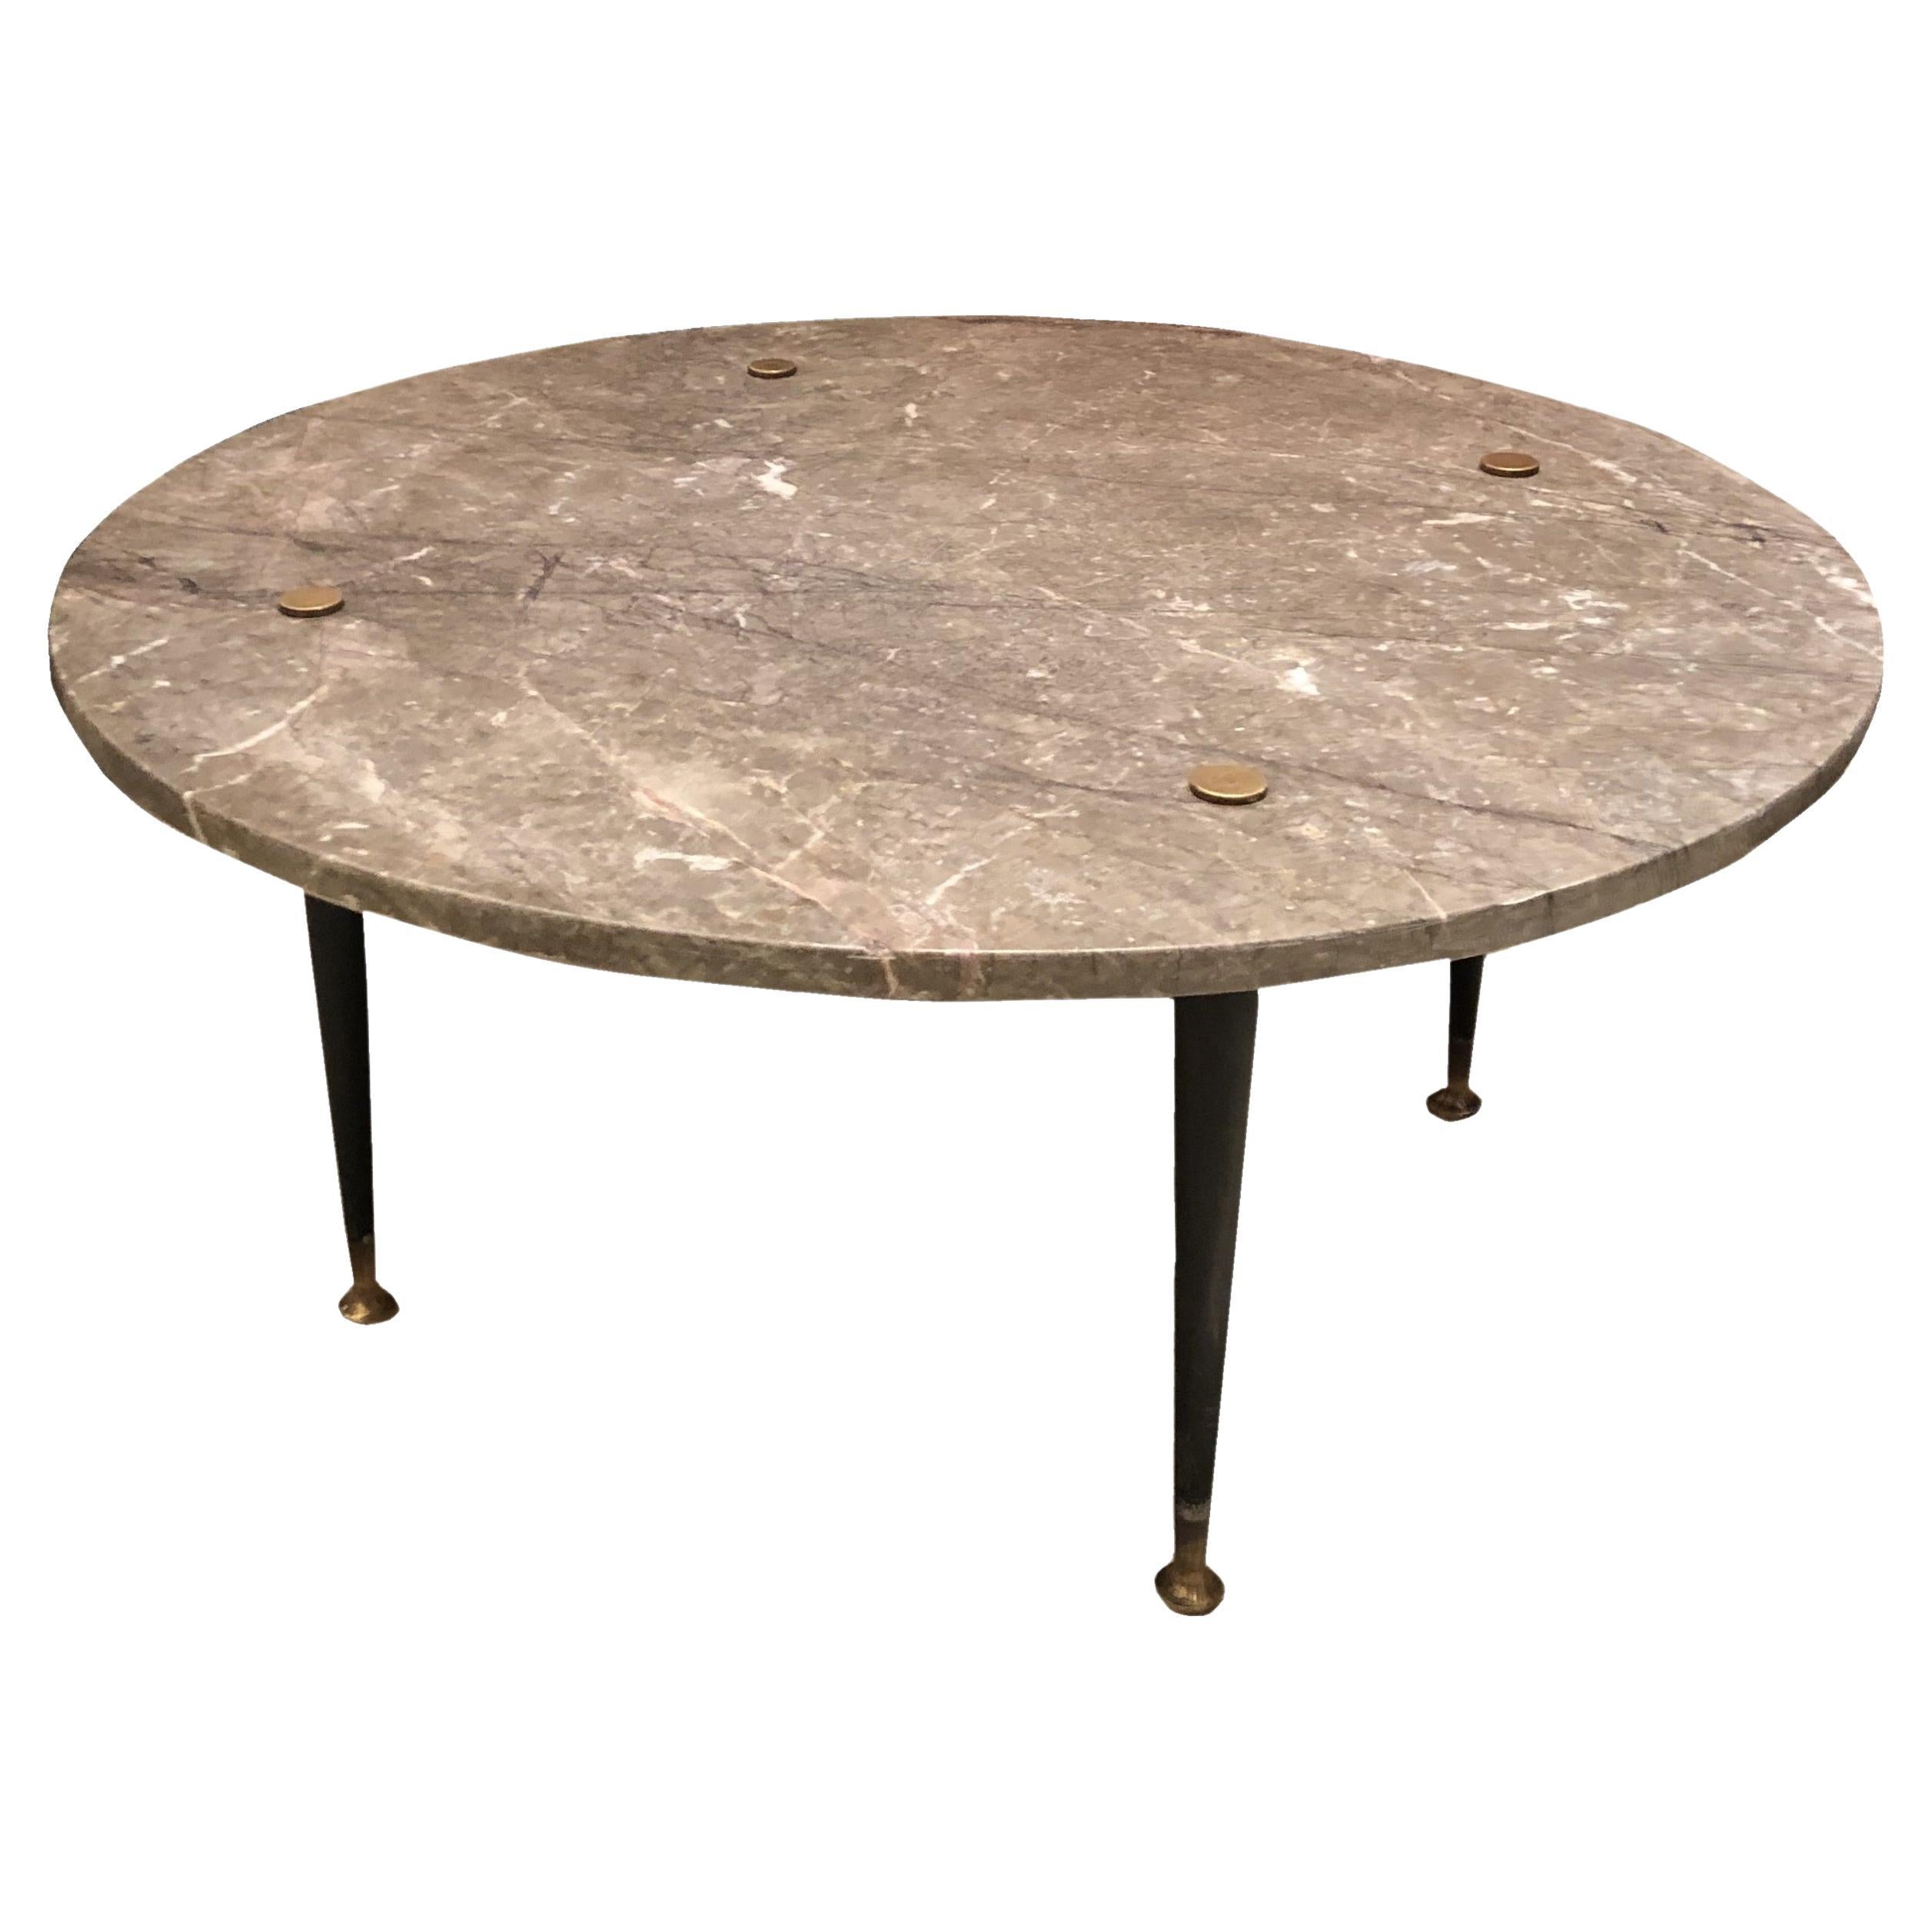 Table basse en marbre et bronze, 60°, France